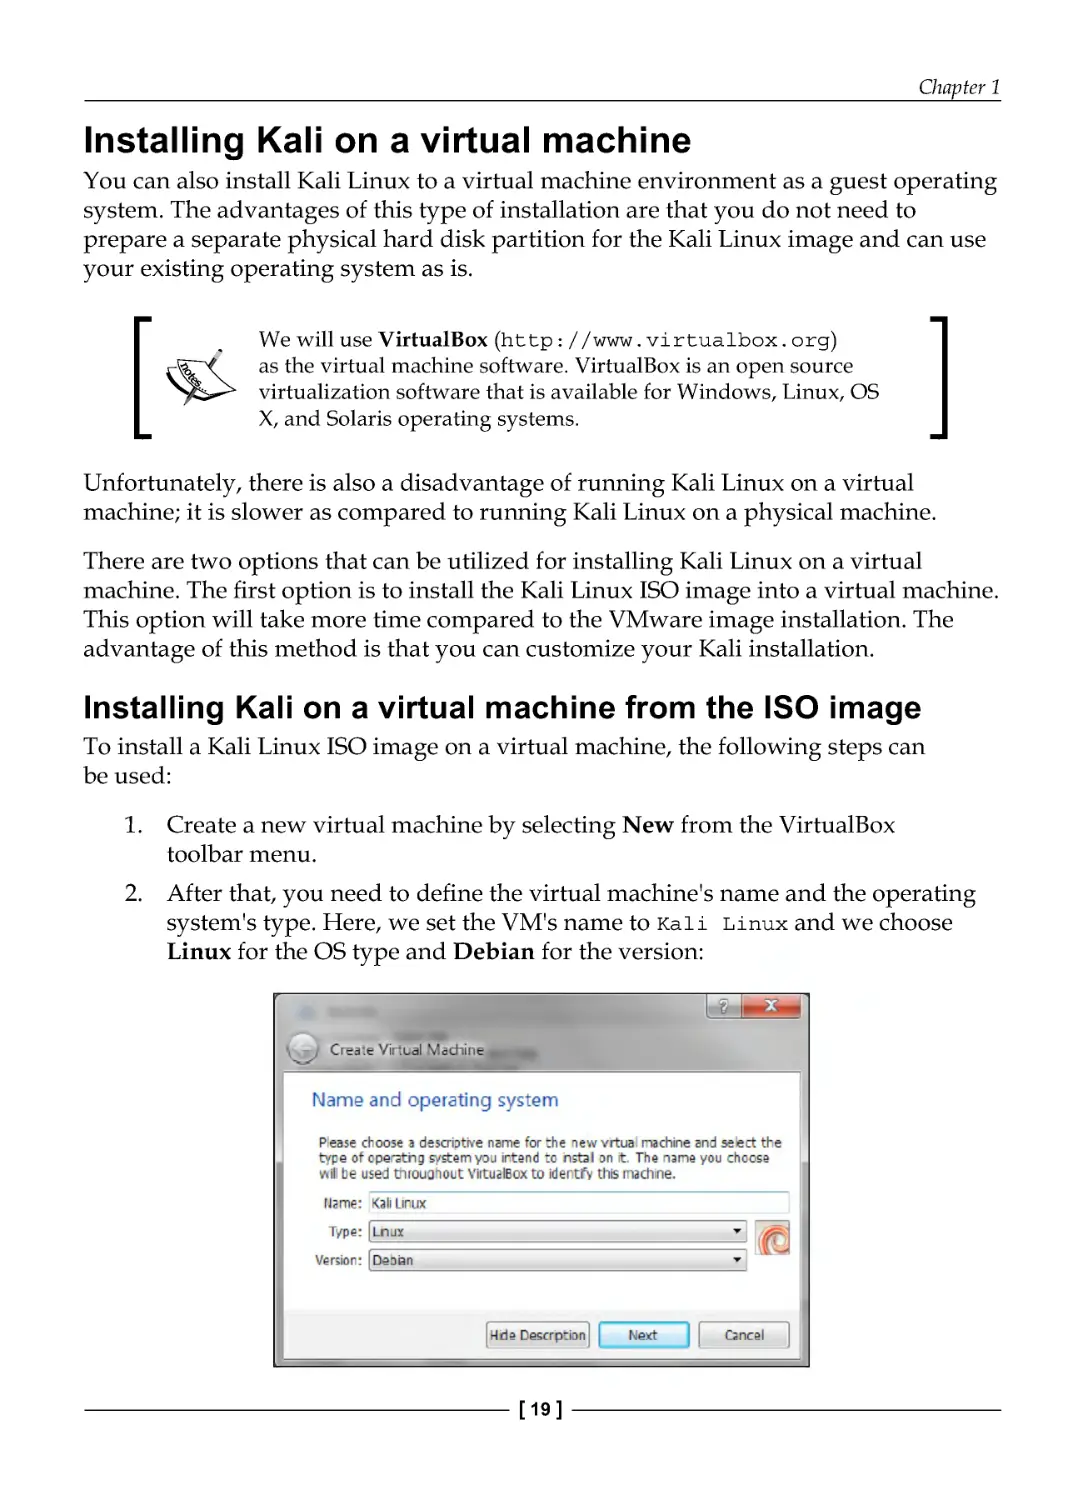 Installing Kali on a virtual machine